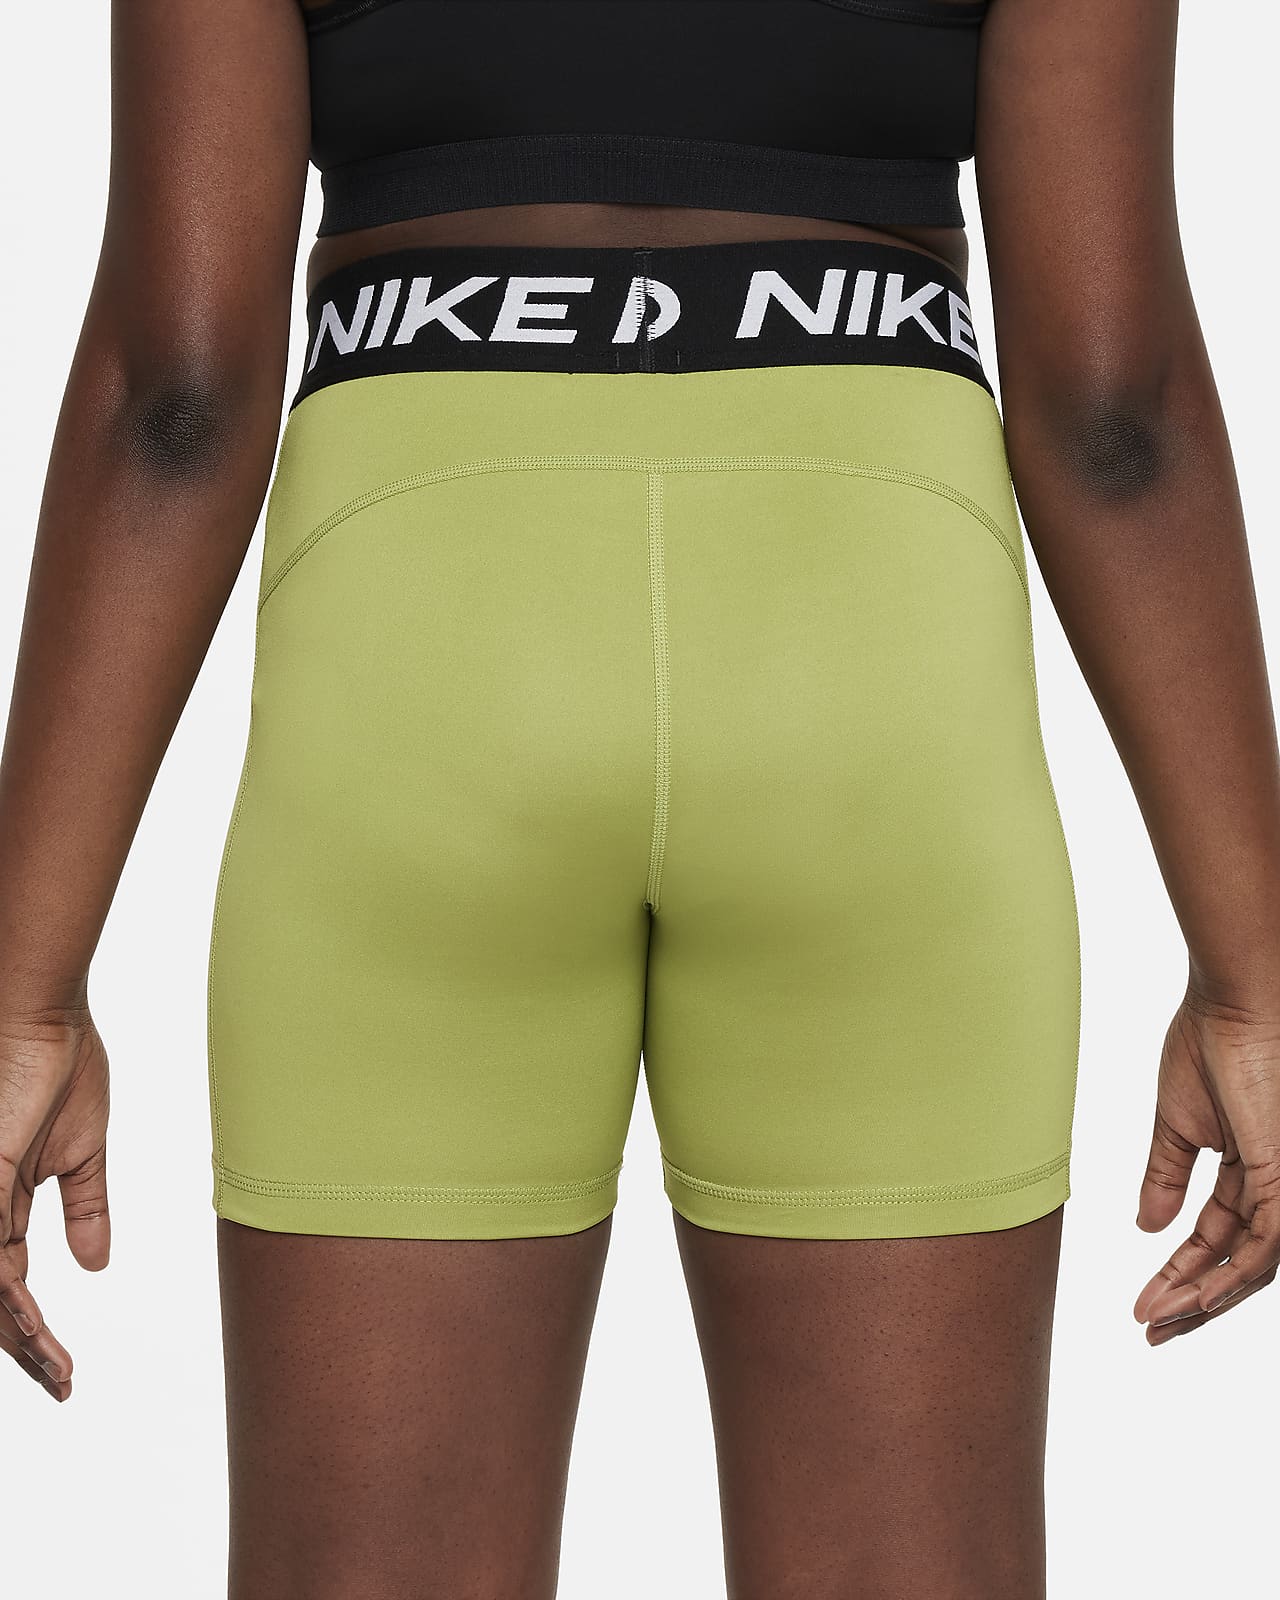 Short Nike Pro 5 Feminino - Preto+Branco